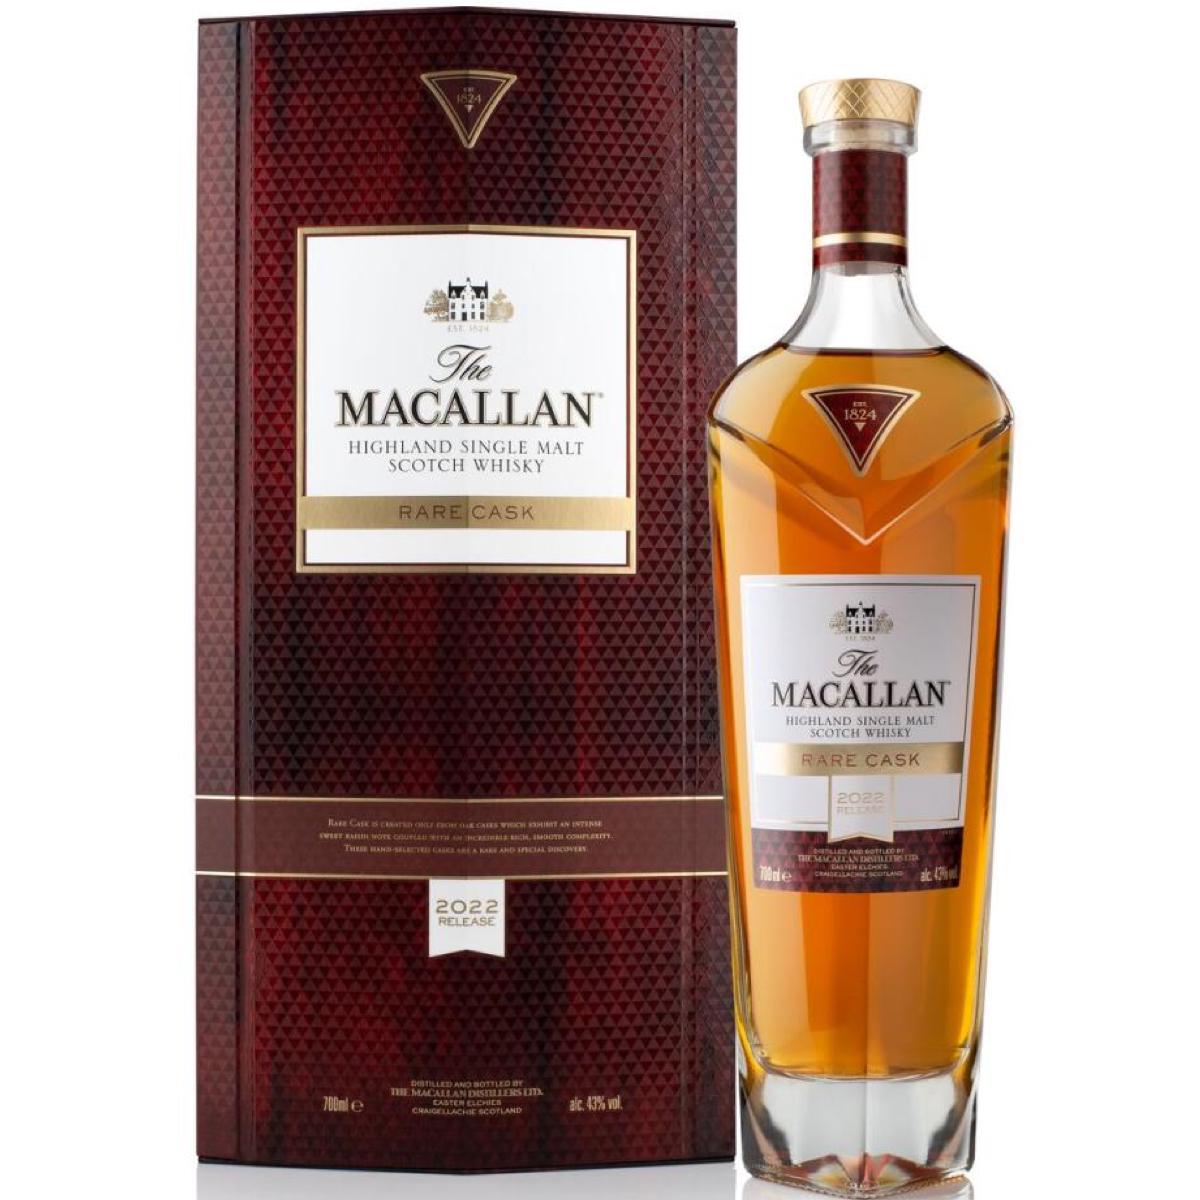 The Macallan Rare Cask 2022 Scotch Whisky - Rare Reserve